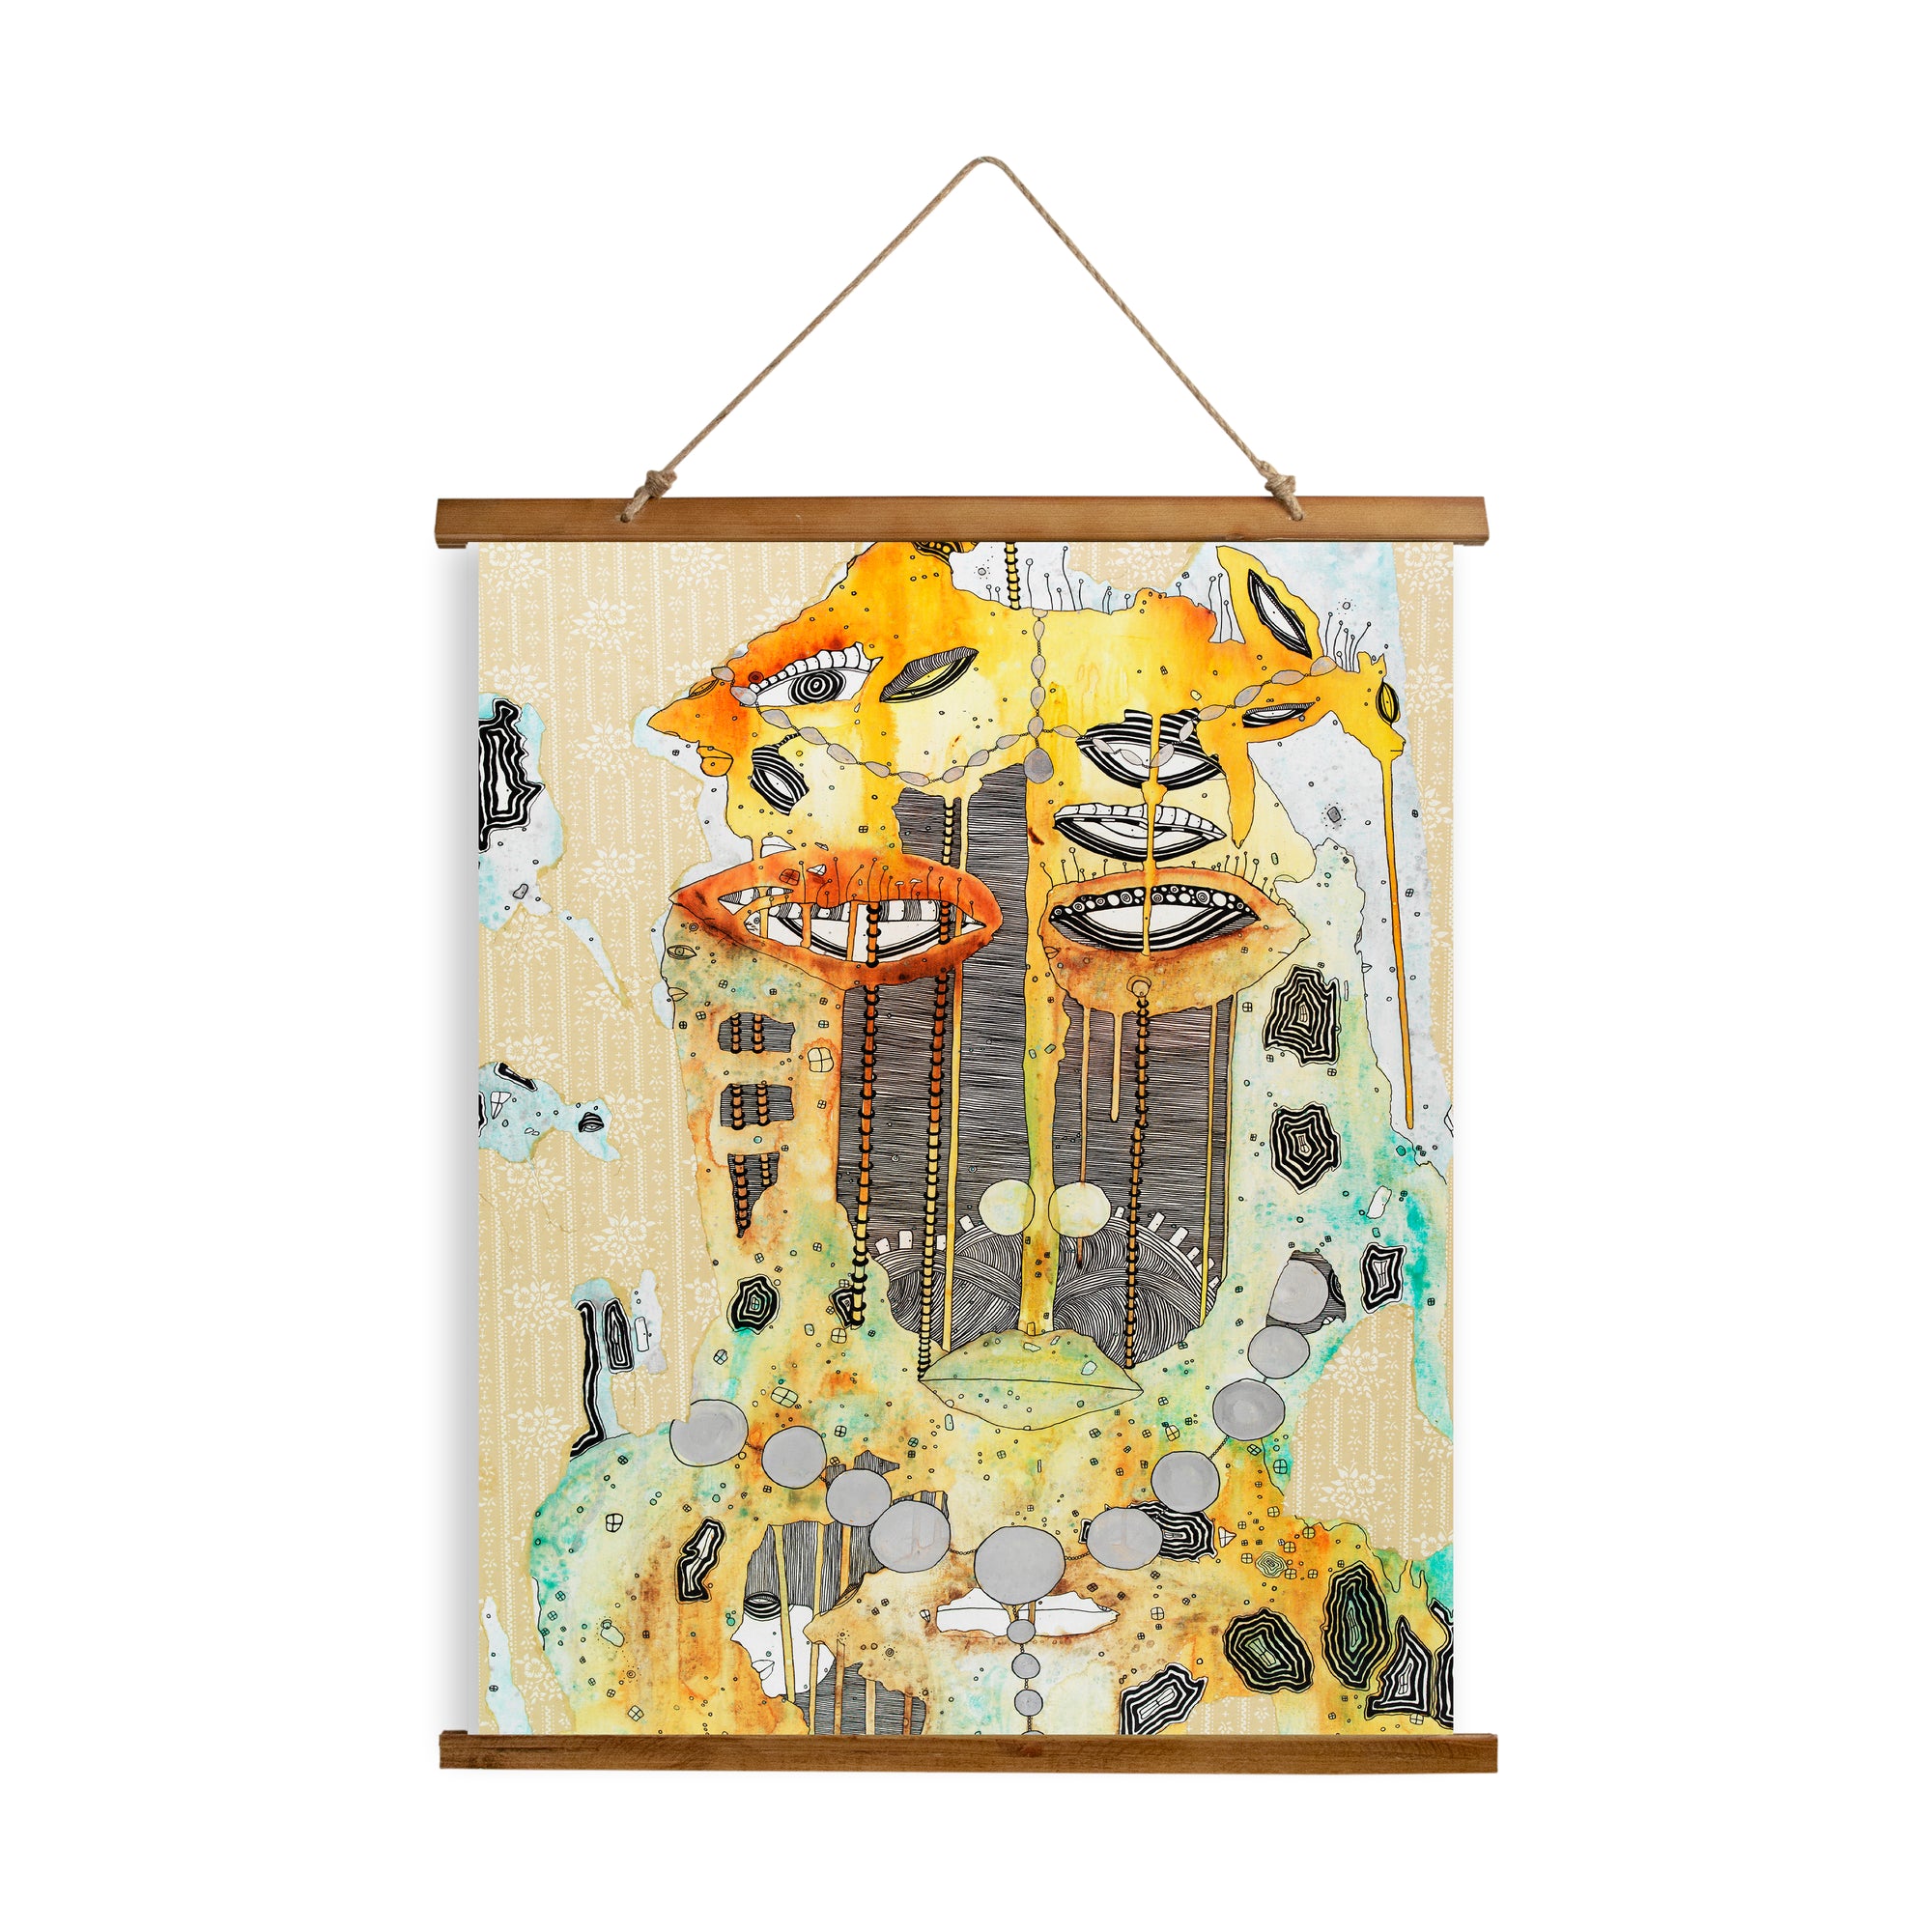 Whimsical Wood Slat Tapestry "Obatala"